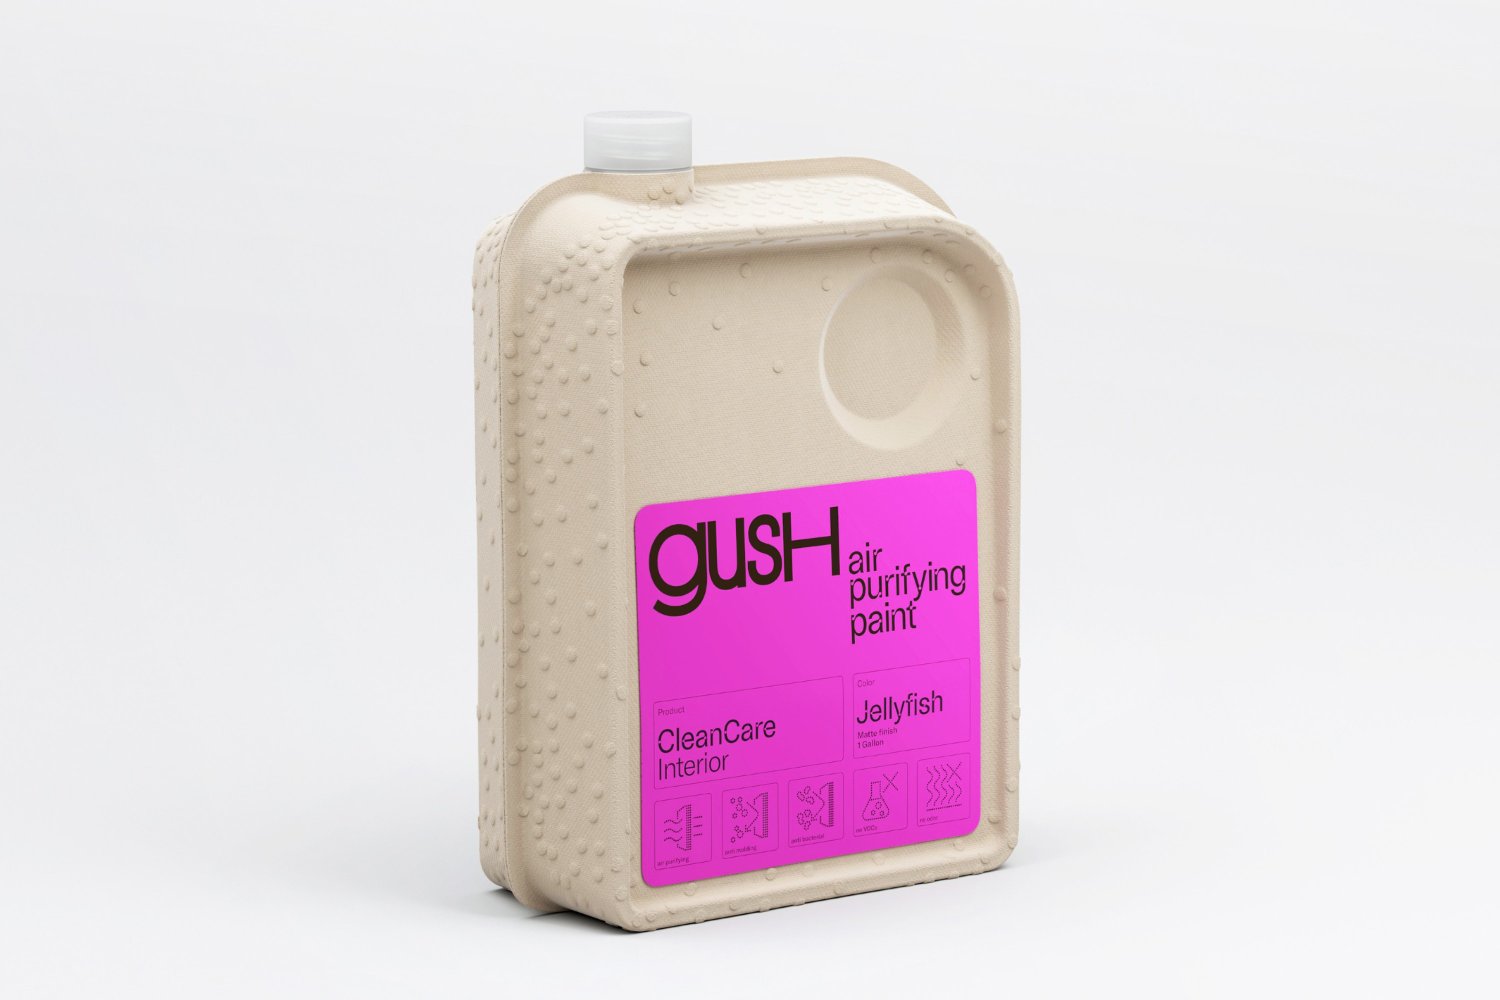 Eddie Opara and Pentagram’s Brand Refresh of Gush Is a Breath of Fresh Air